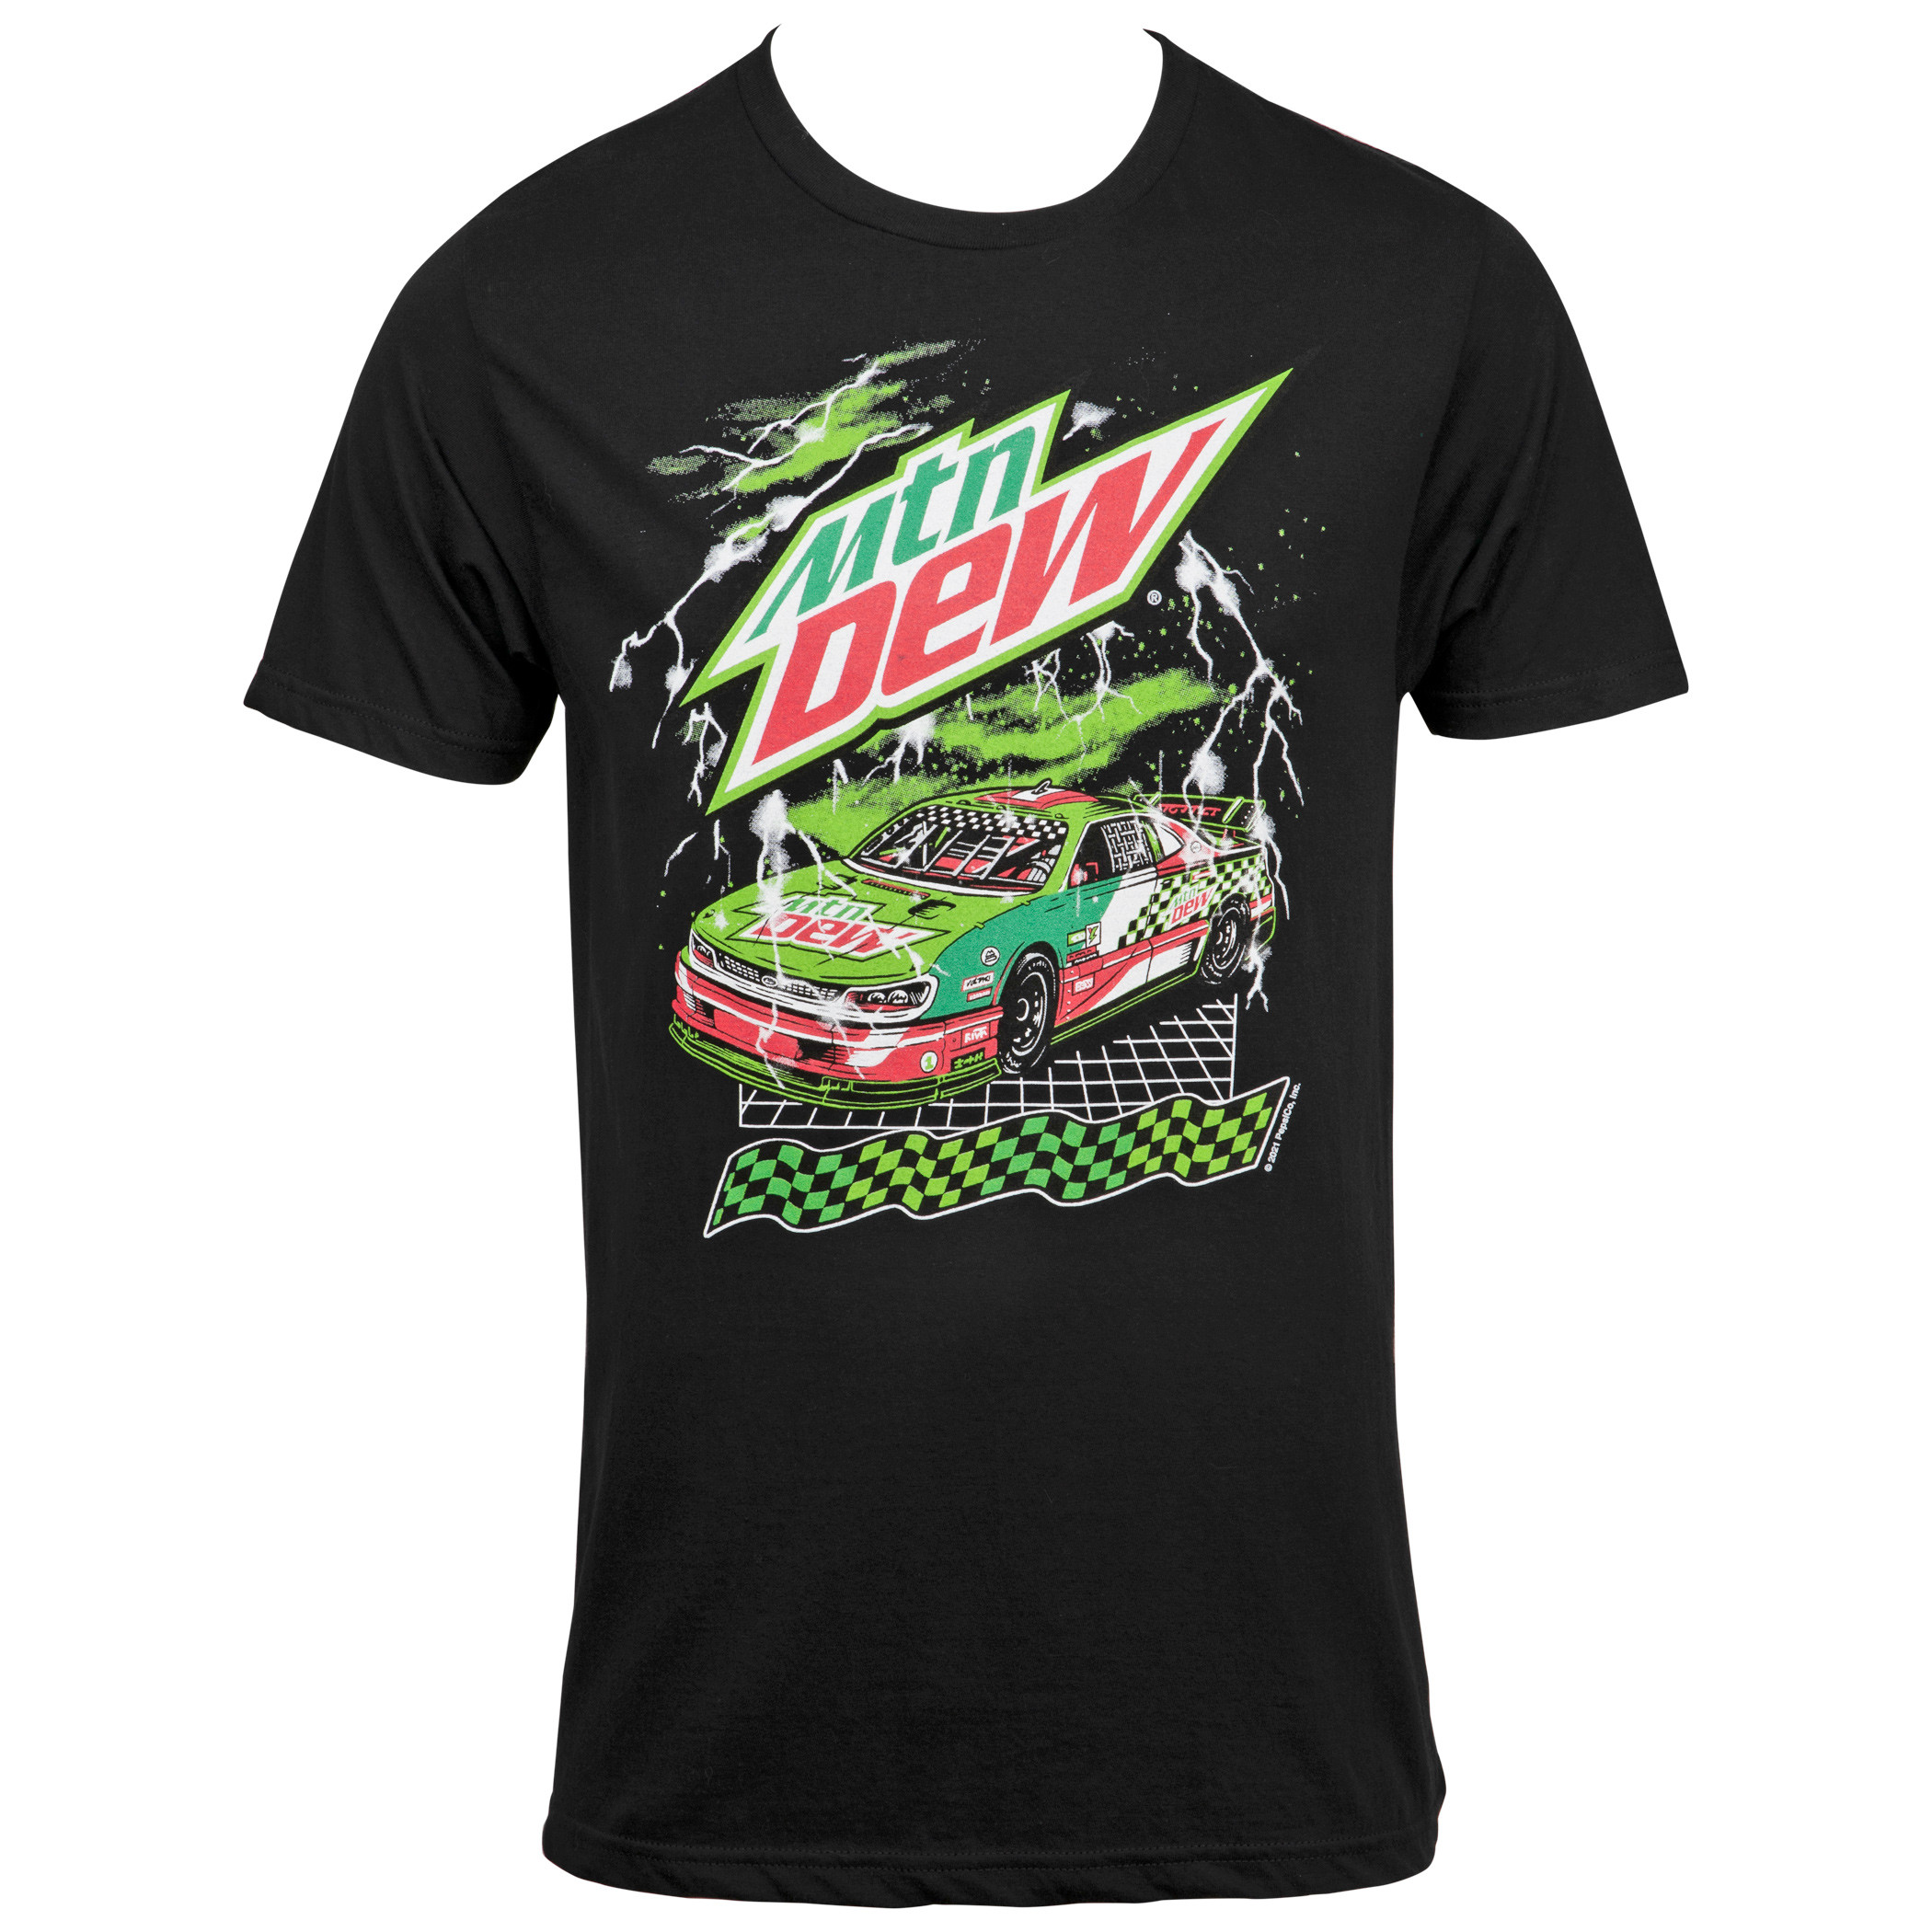 Mountain Dew NASCAR Team T-Shirt